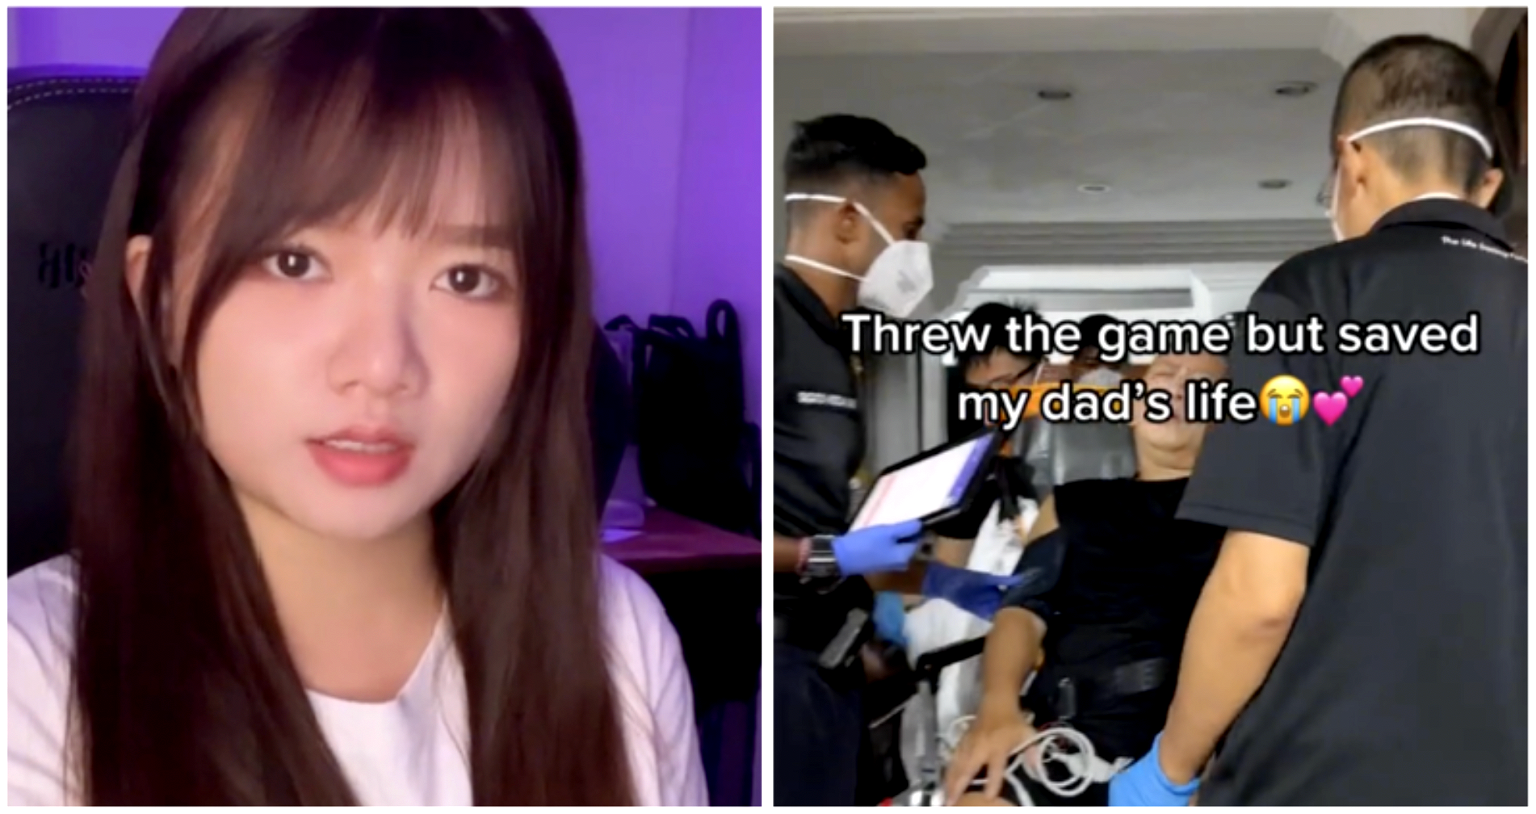 Singaporean Twitch streamer abandons ‘Valorant’ livestream to save father’s life